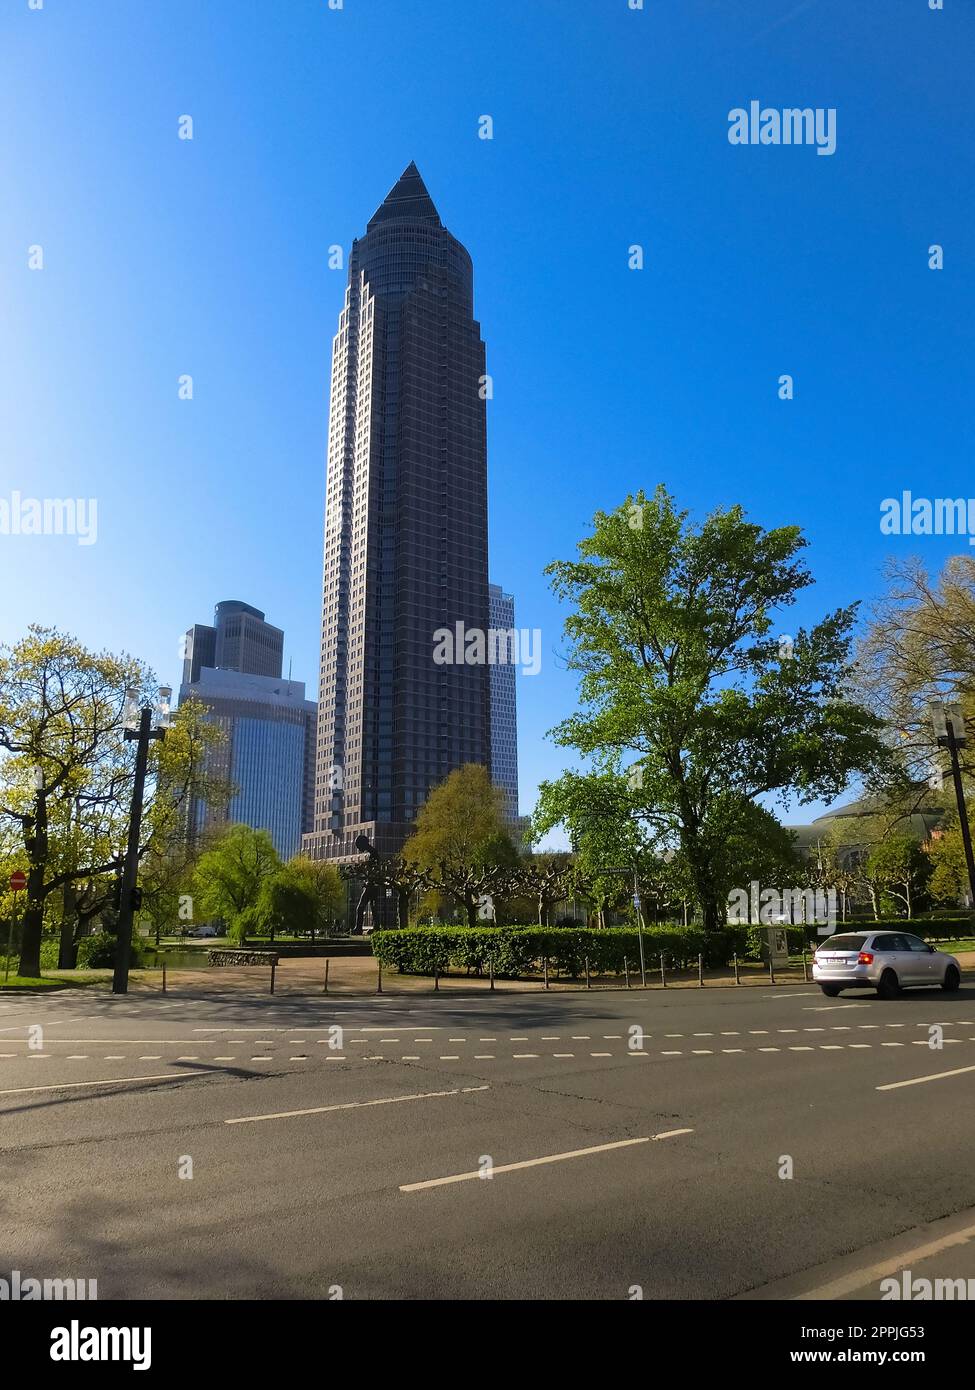 Messeturm, or Trade Fair Tower, a skyscraper in Frankfurt am Main, Germany Stock Photo